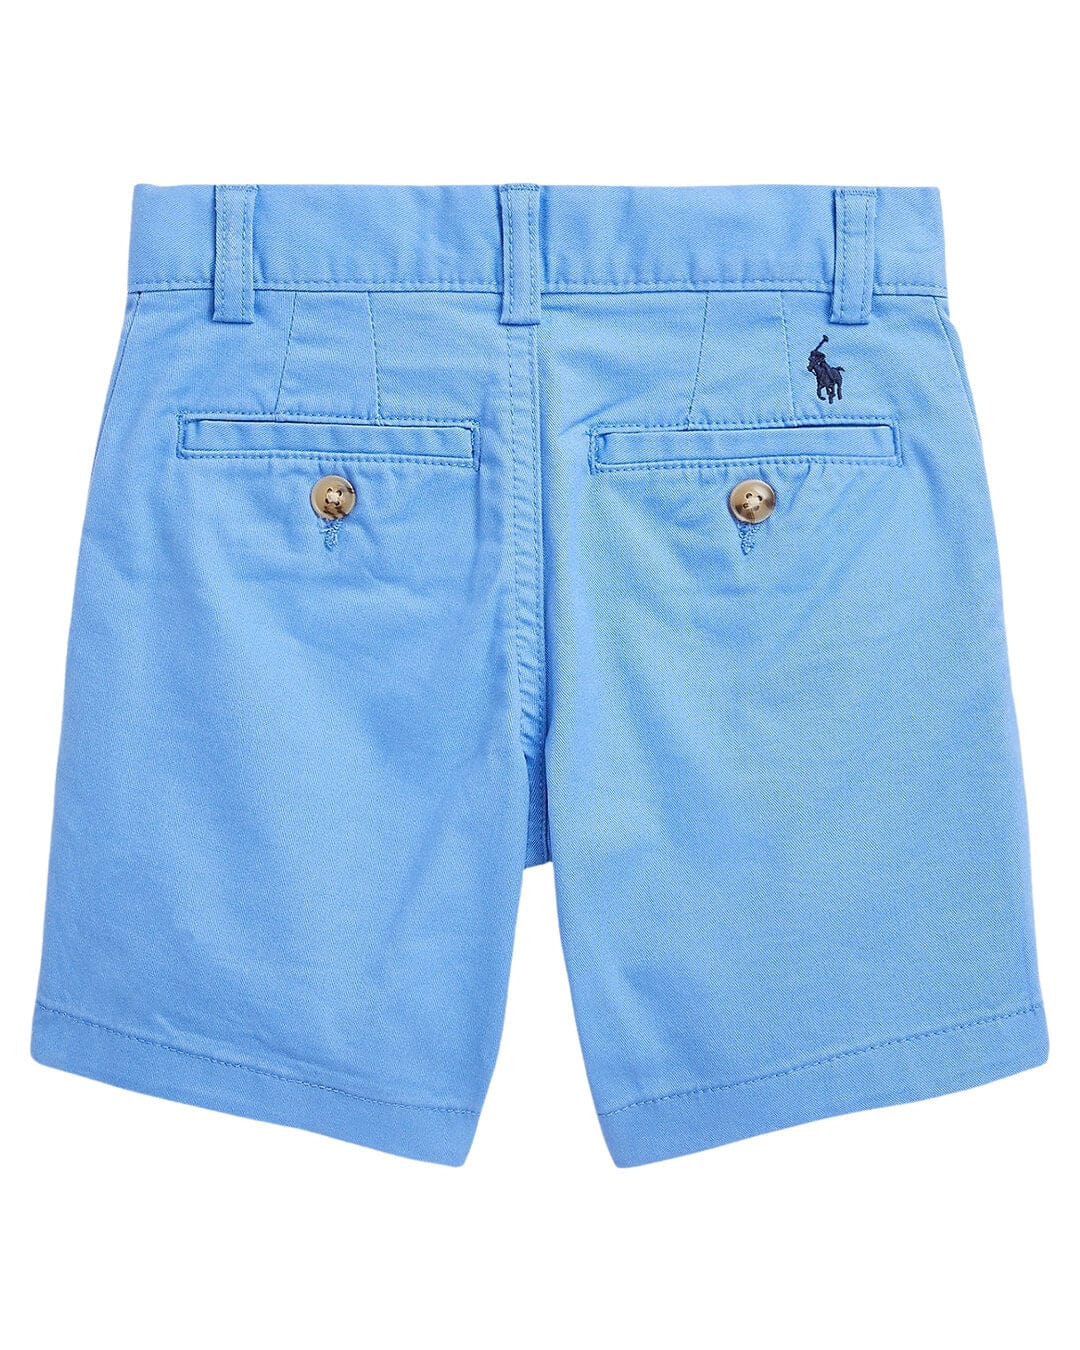 Polo Ralph Lauren Shorts Boys Polo Ralph Lauren Bedford Blue Flat Front Shorts